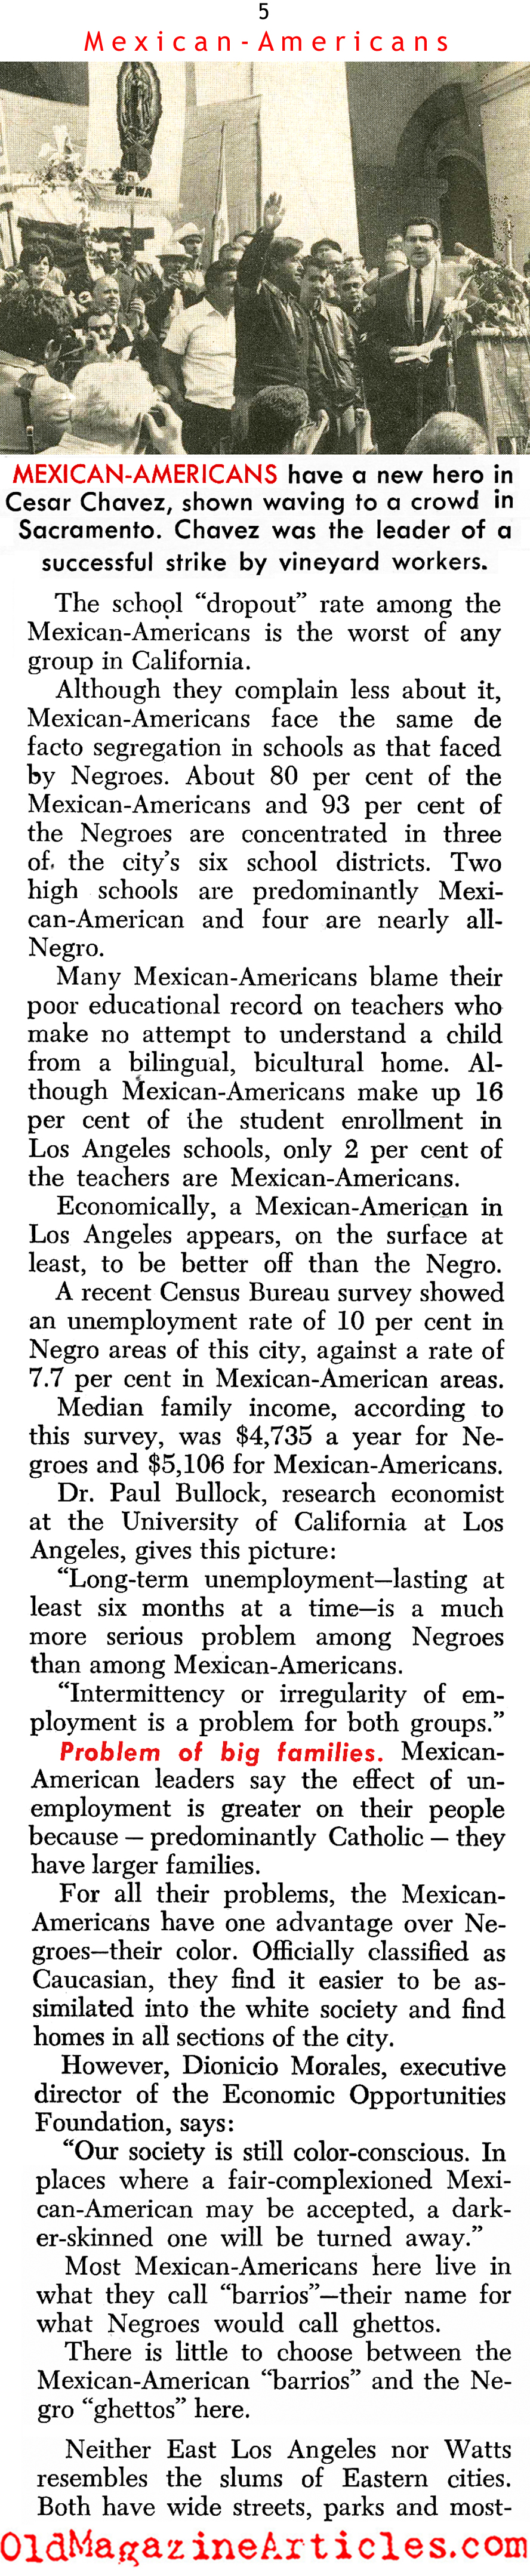 The Chicano Struggle (United States News, 1966)